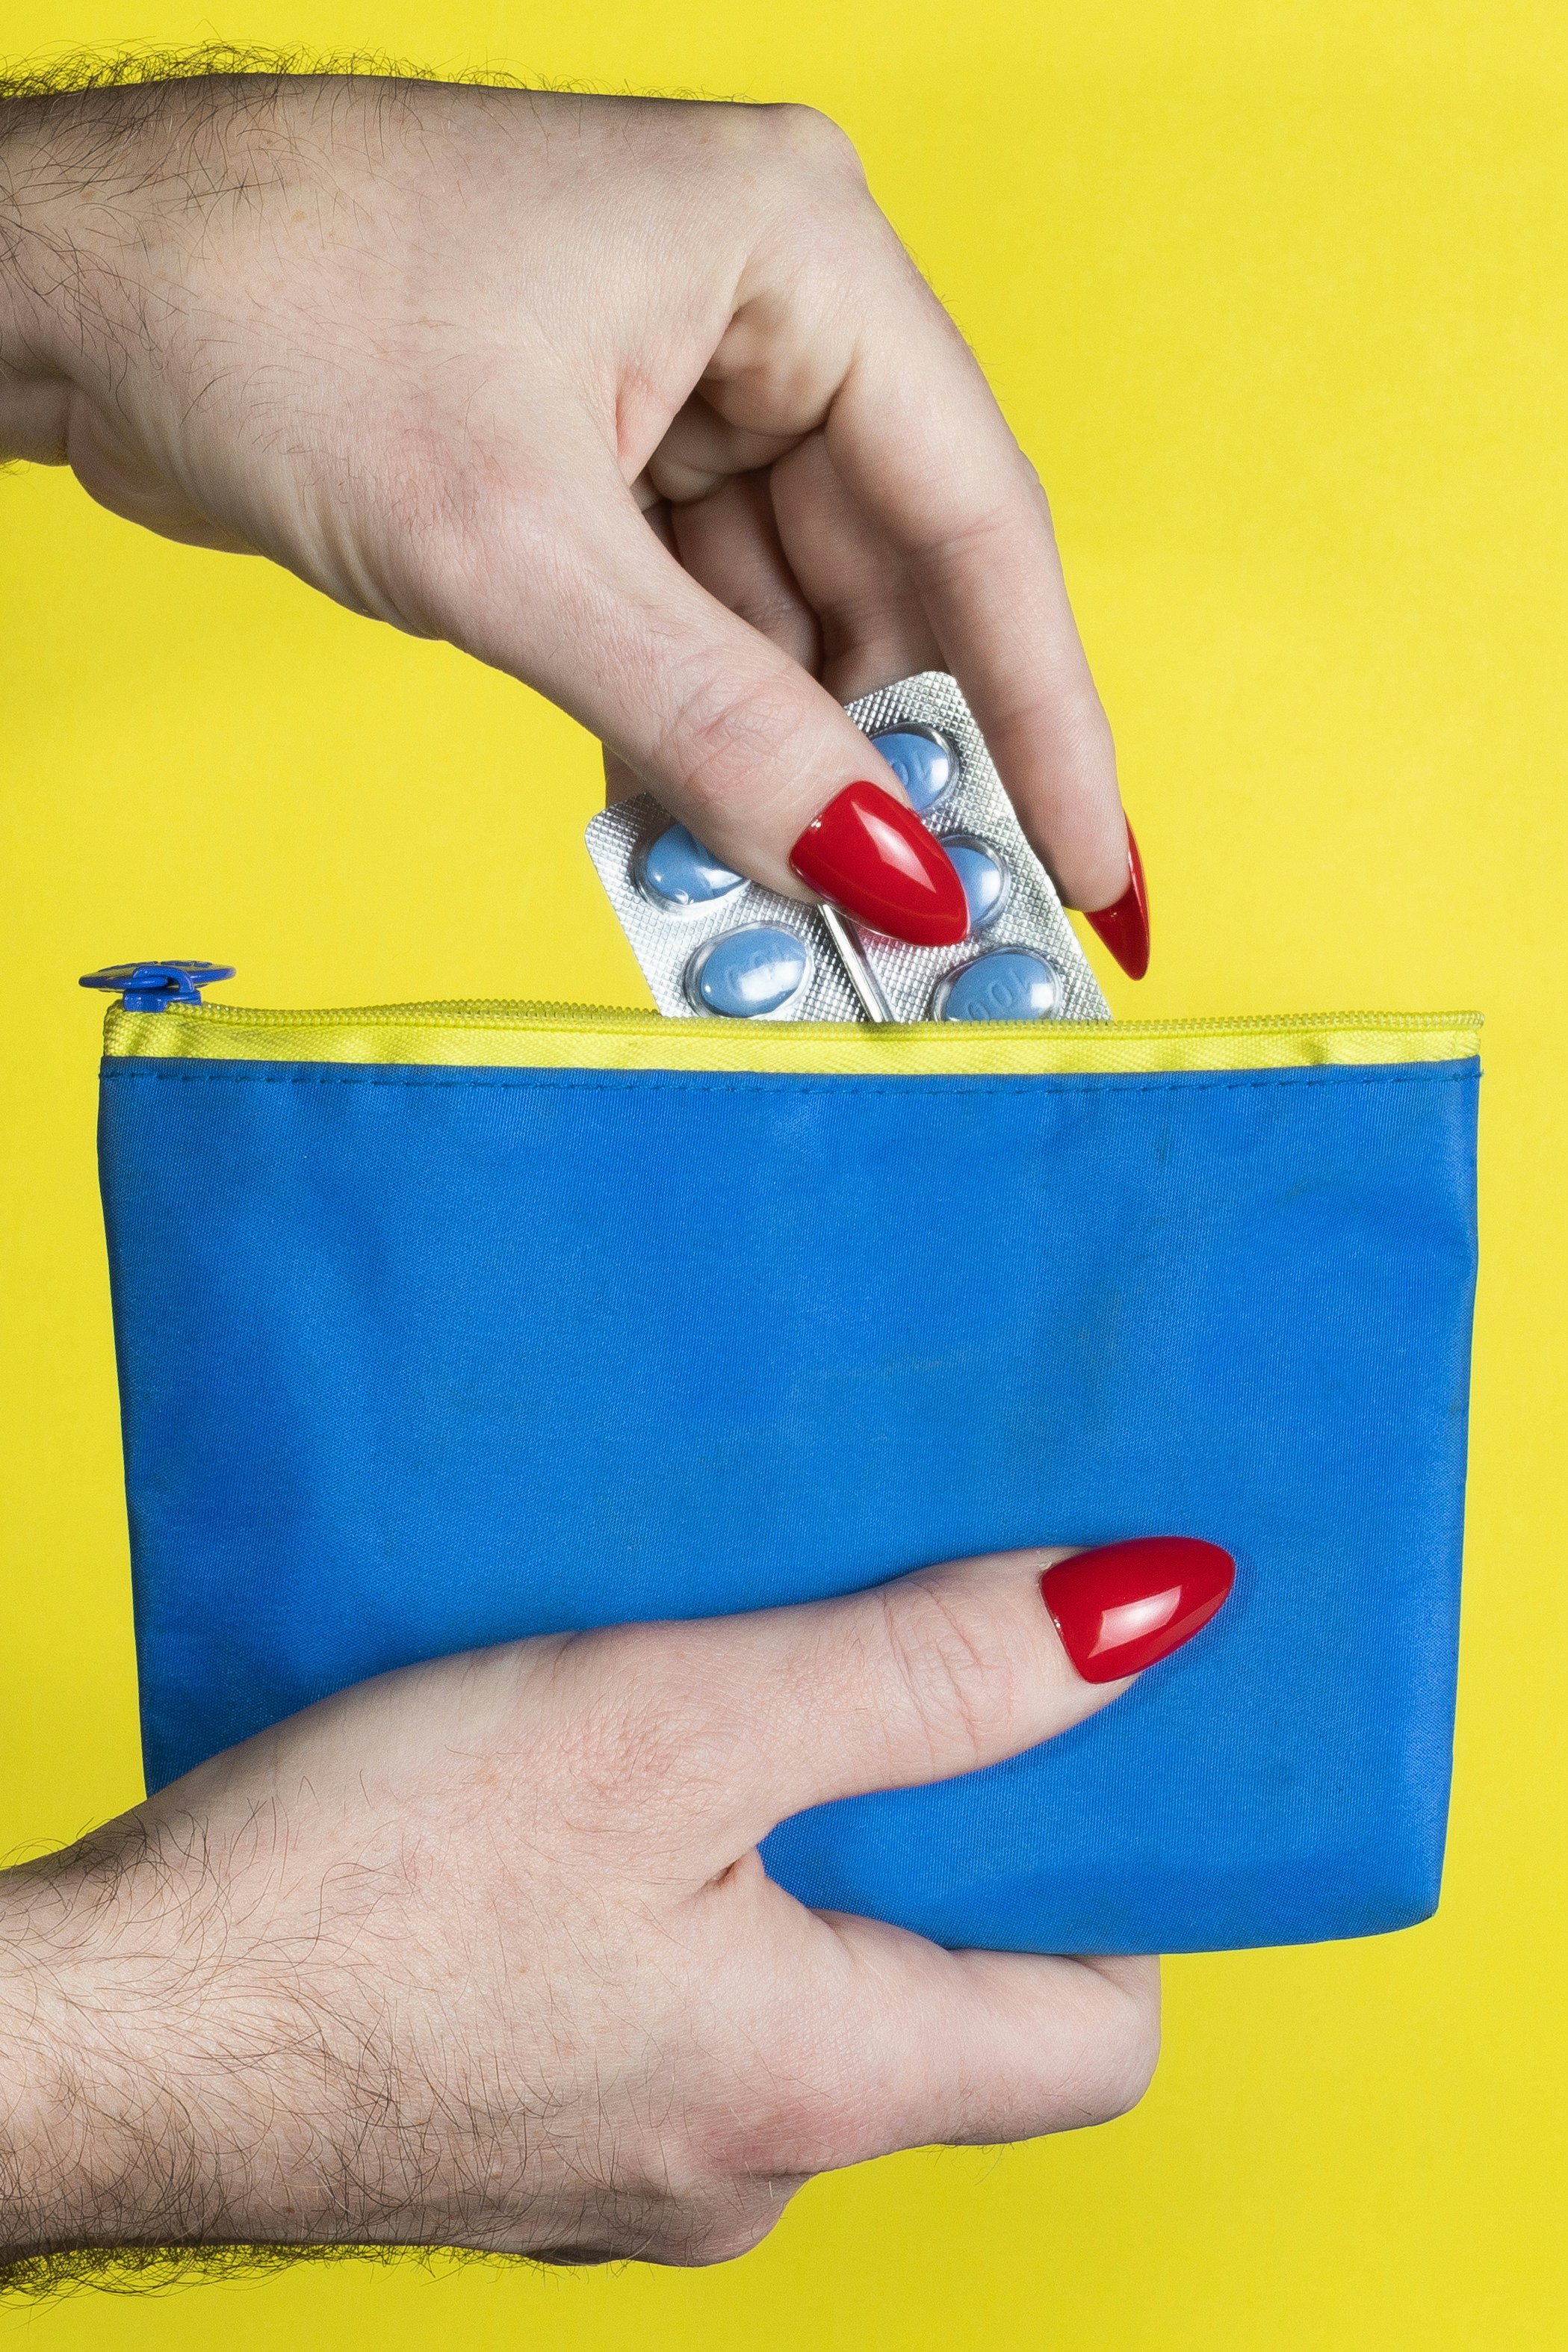 a woman's hand holding a blue purse